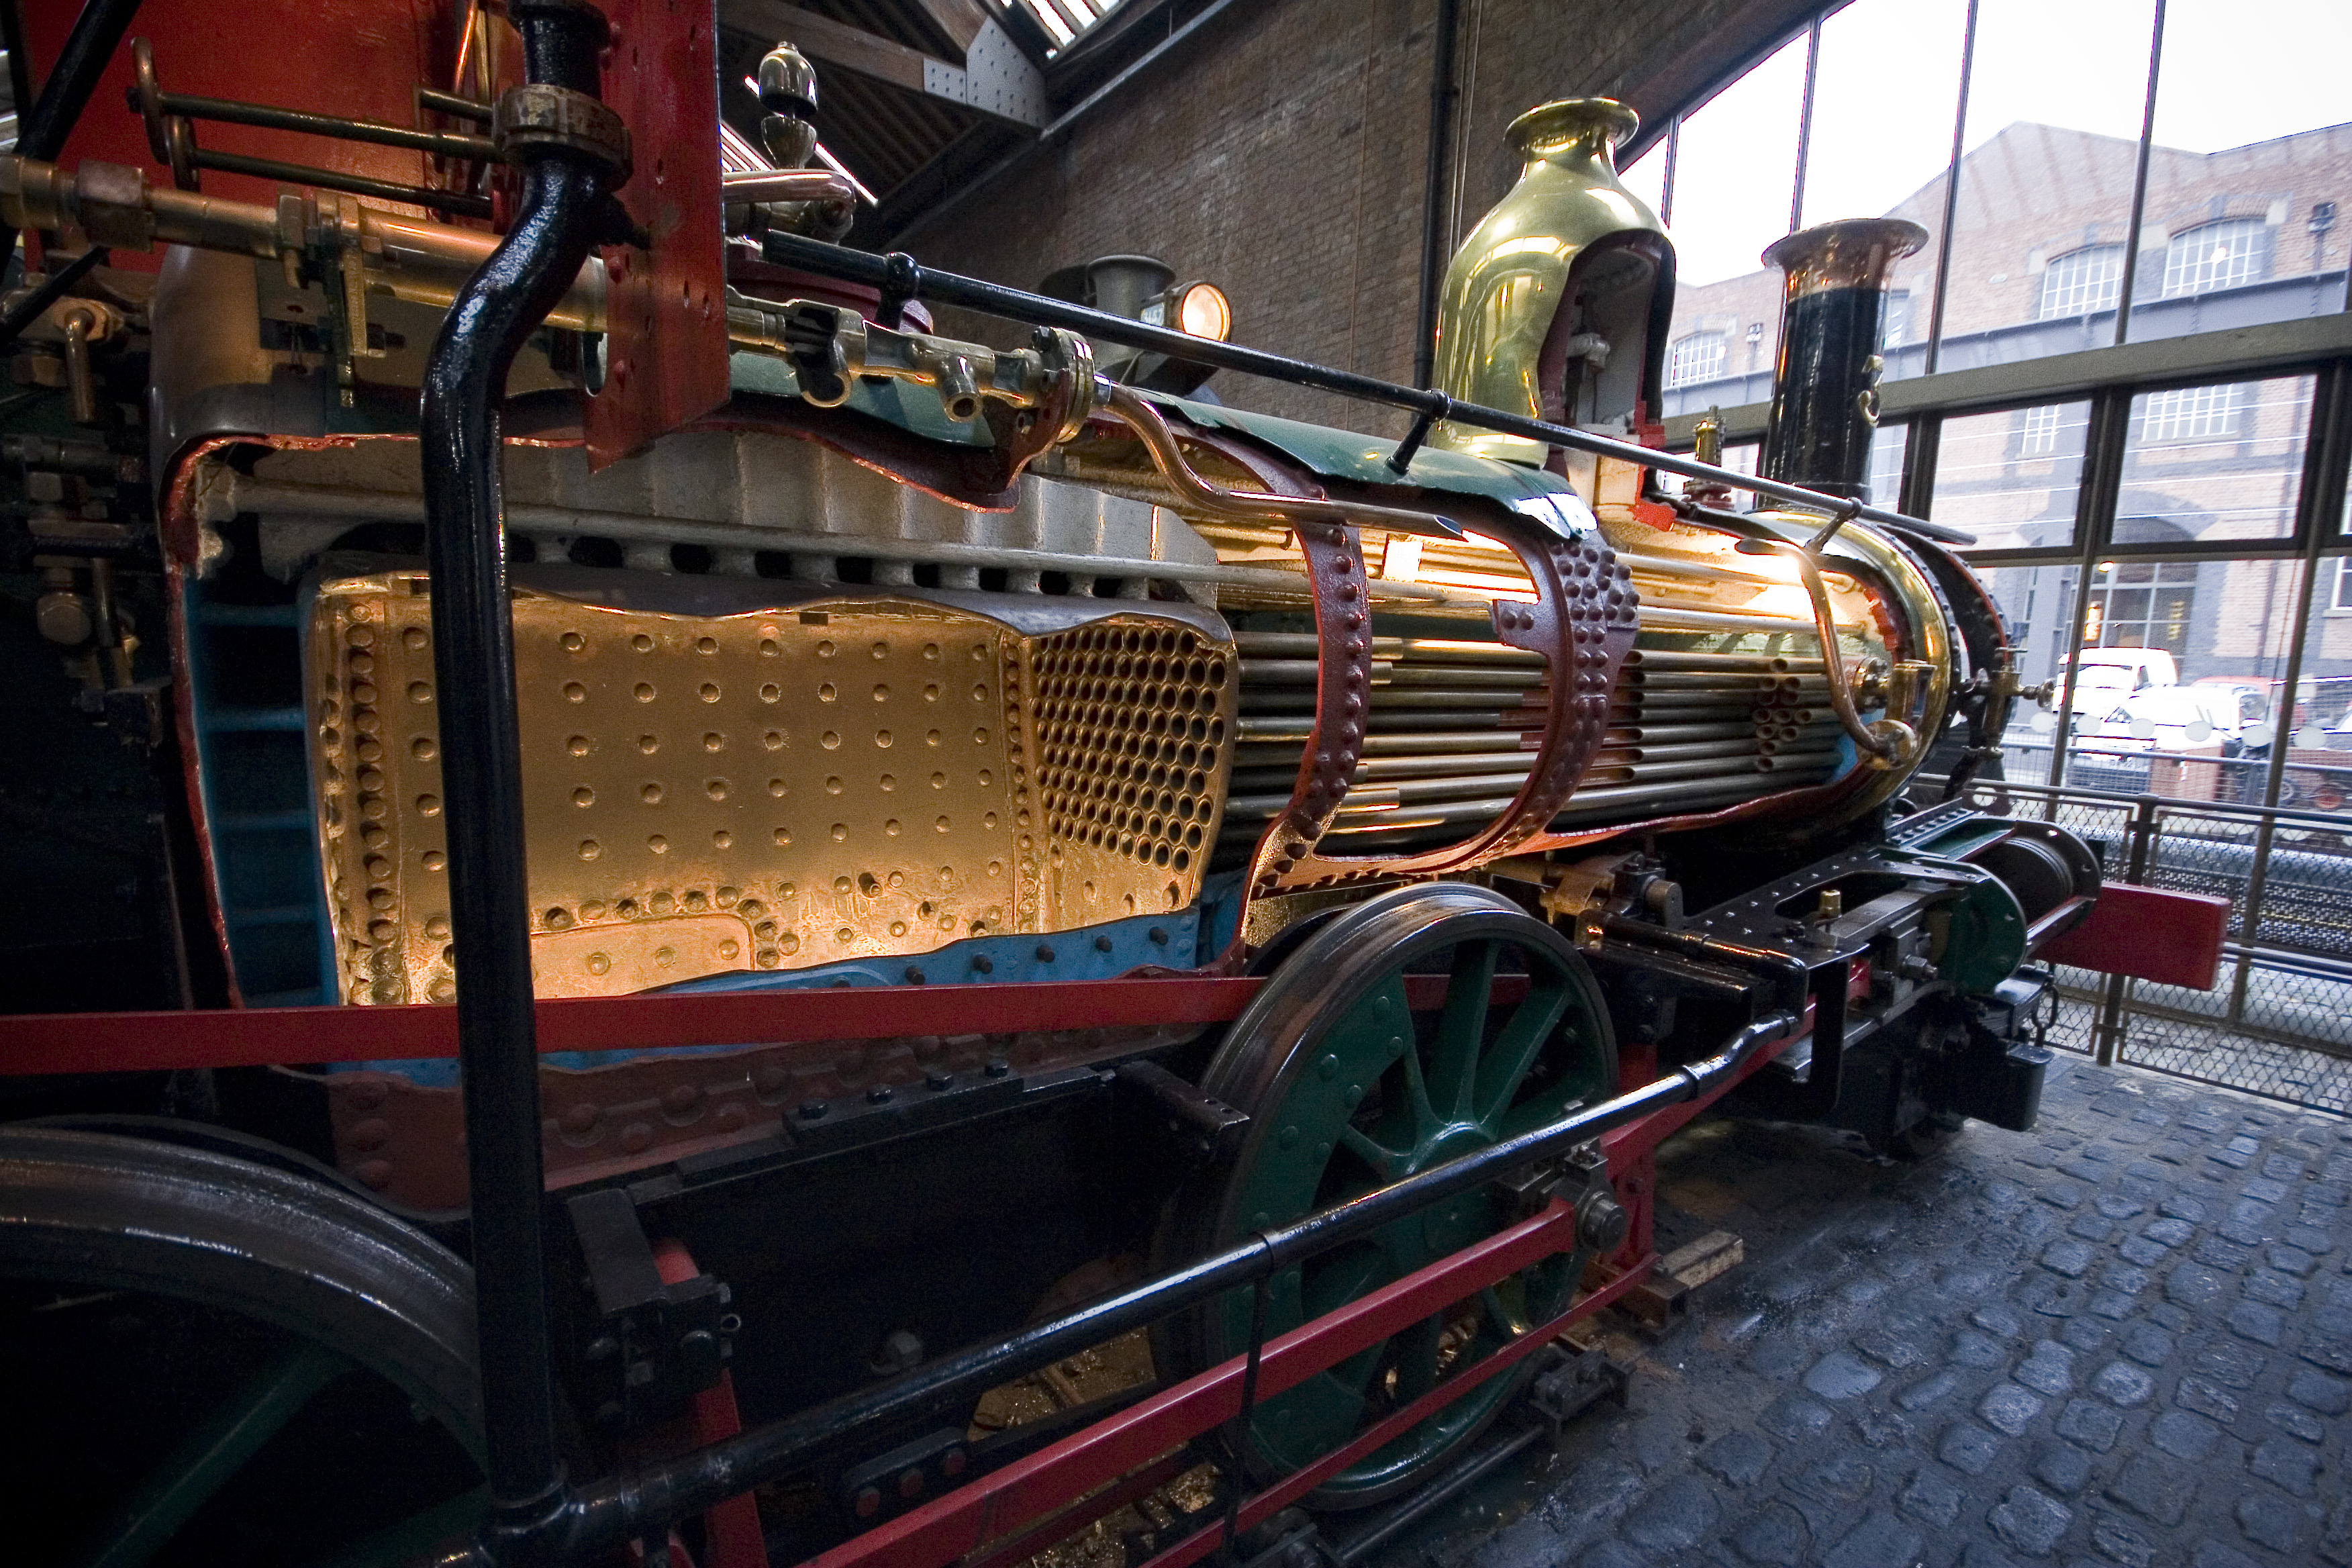 File:Cutaway steam locomotive.jpg - Wikimedia Commons